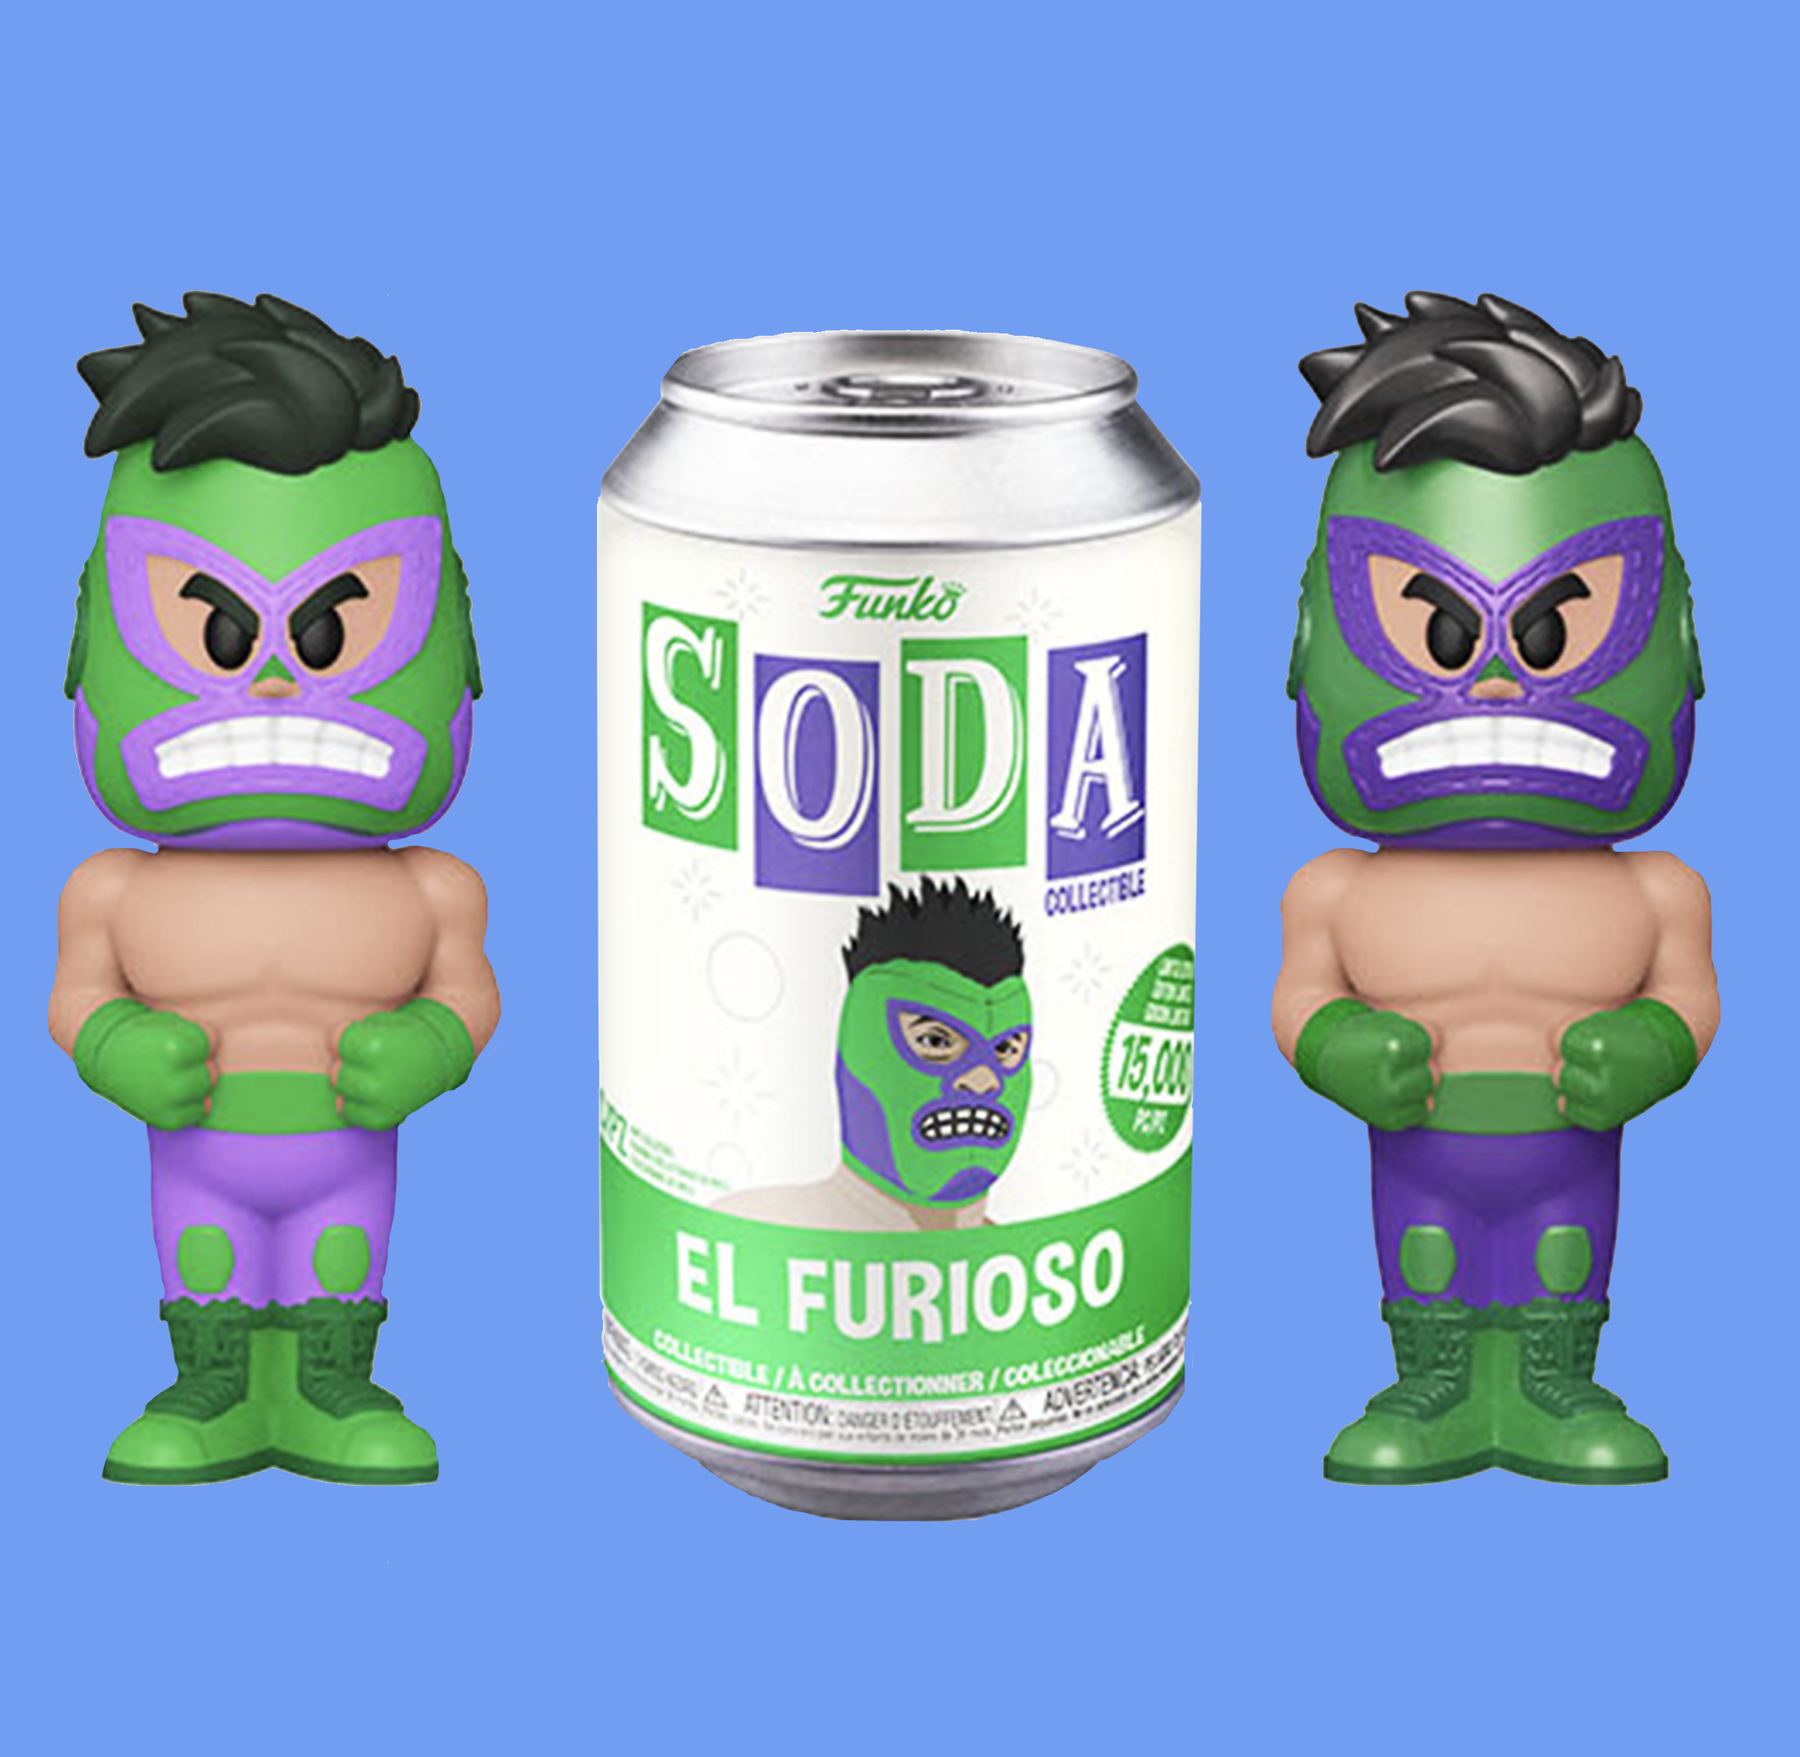 Funko Soda - El Furioso W/ Chase